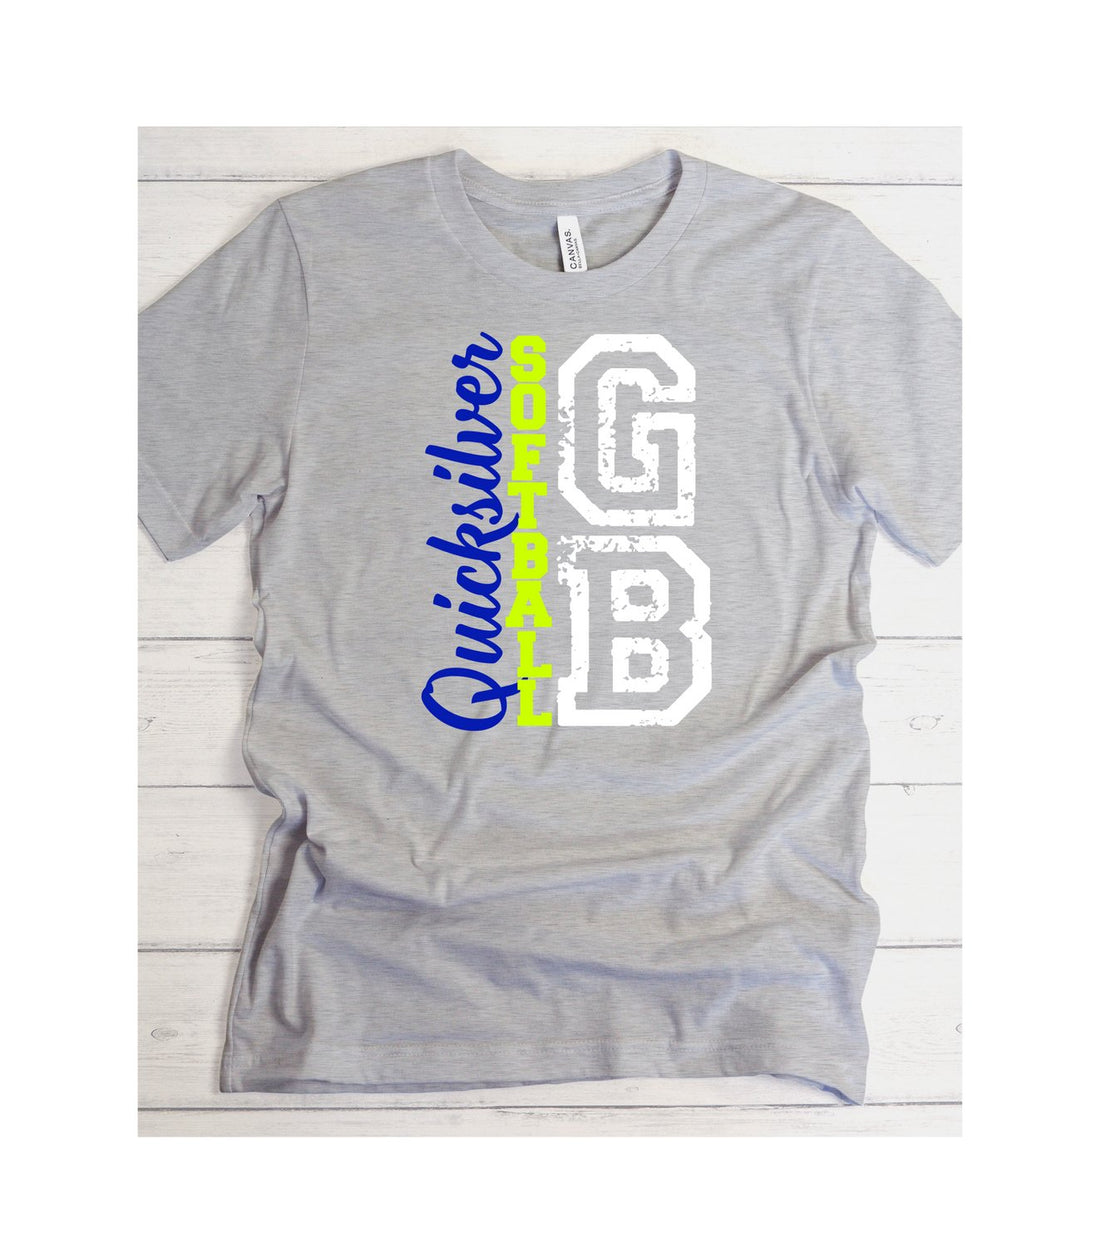 QS Softball GB Short Sleeve Jersey Tee - T-Shirts - Positively Sassy - QS Softball GB Short Sleeve Jersey Tee